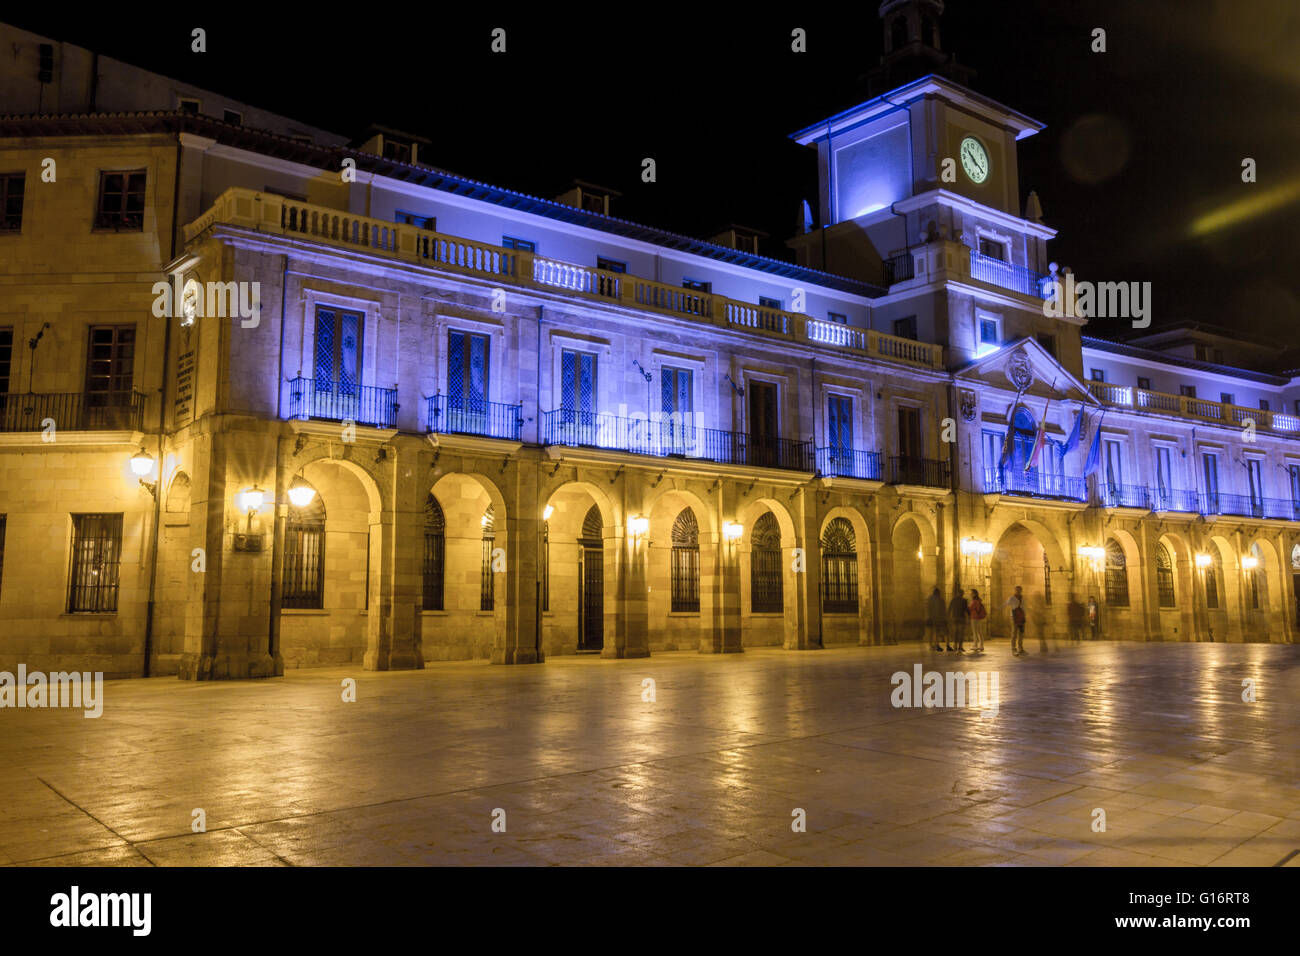 Night view of famous city of Vigo, Spain Stock Photo